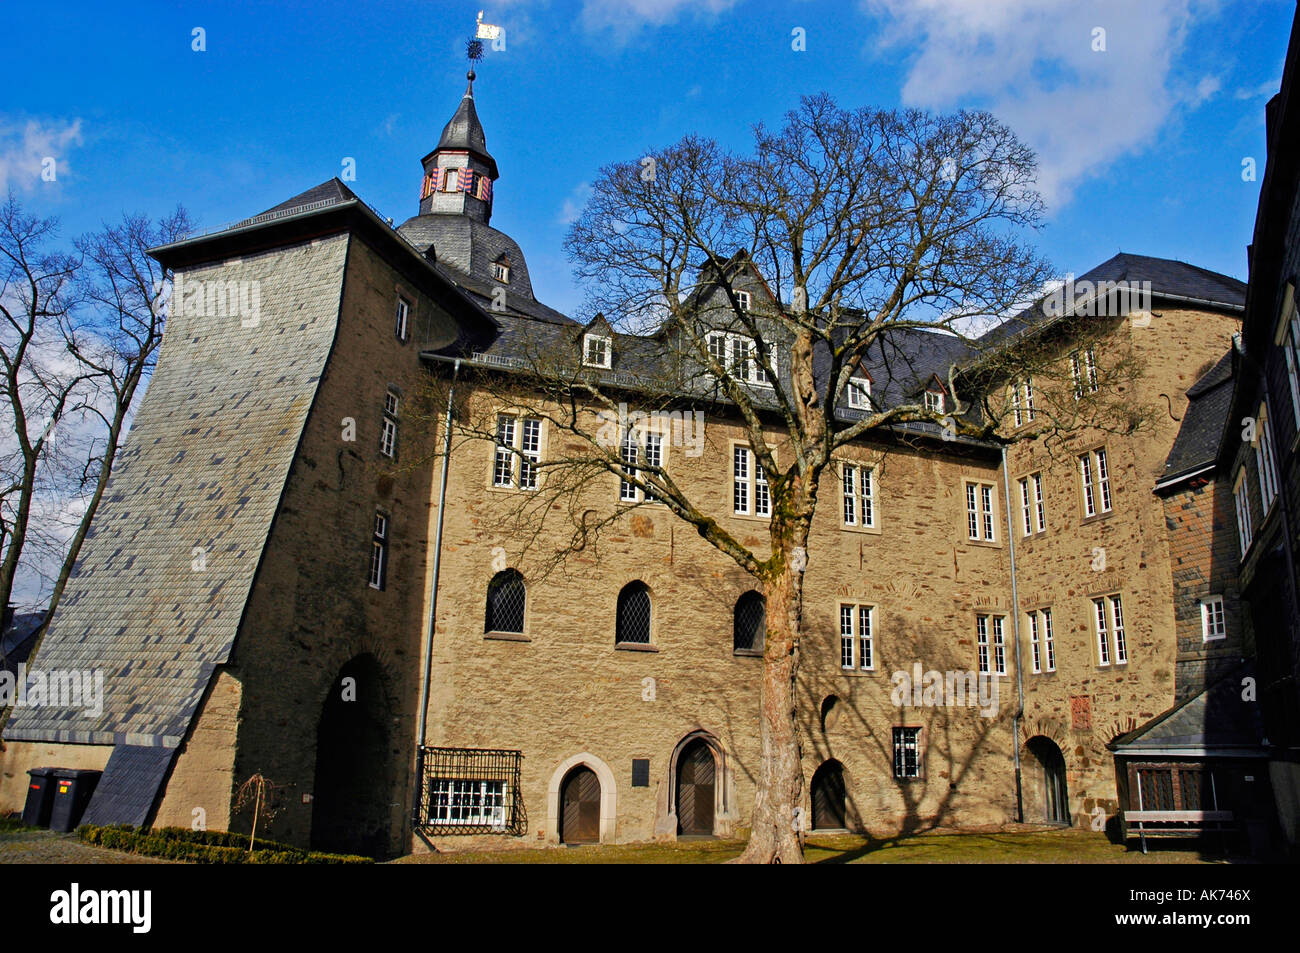 Upper Castle / Siegen Stock Photo